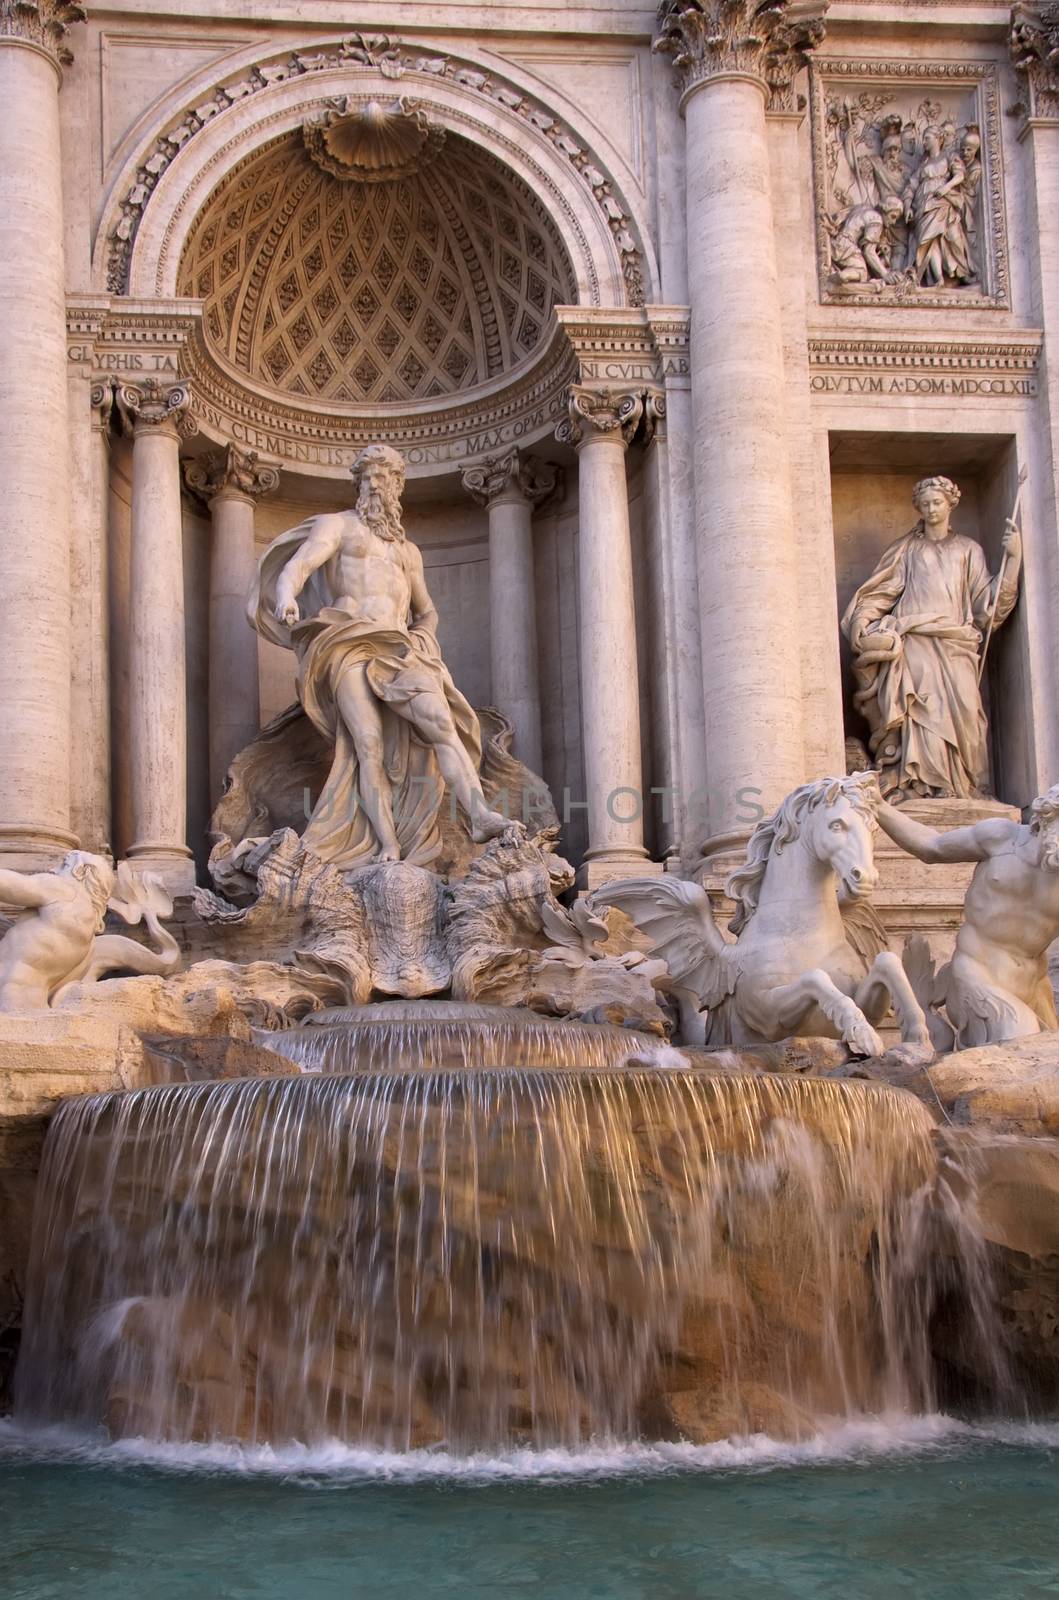 The Trevi Fountain Fontana di Trevi in Rome, Italy